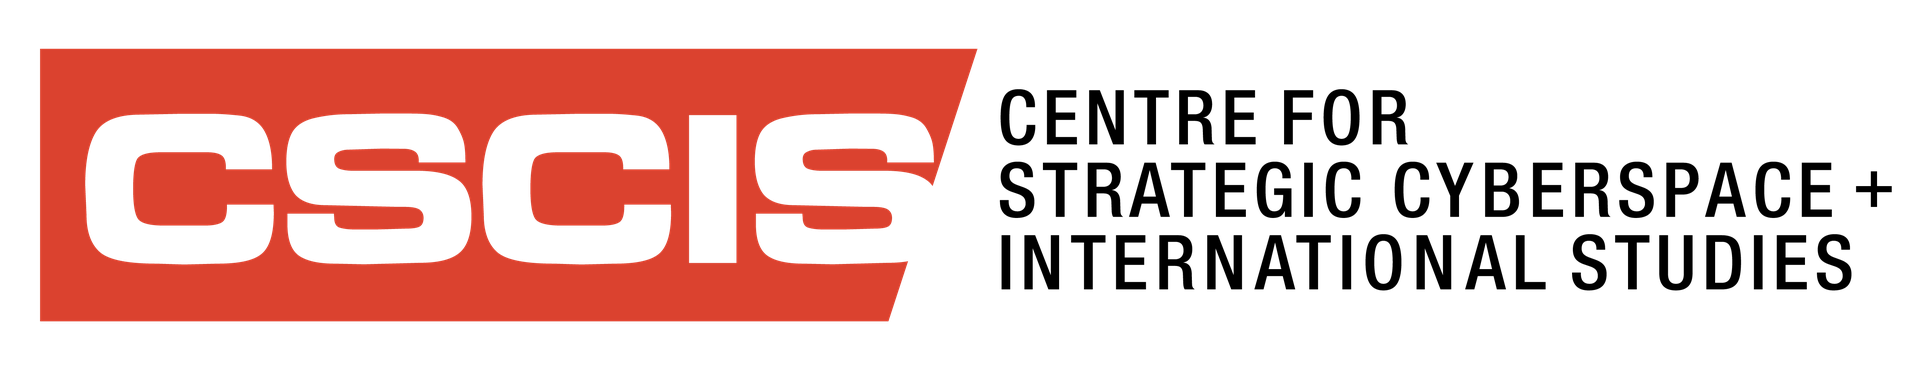 CSCIS logo